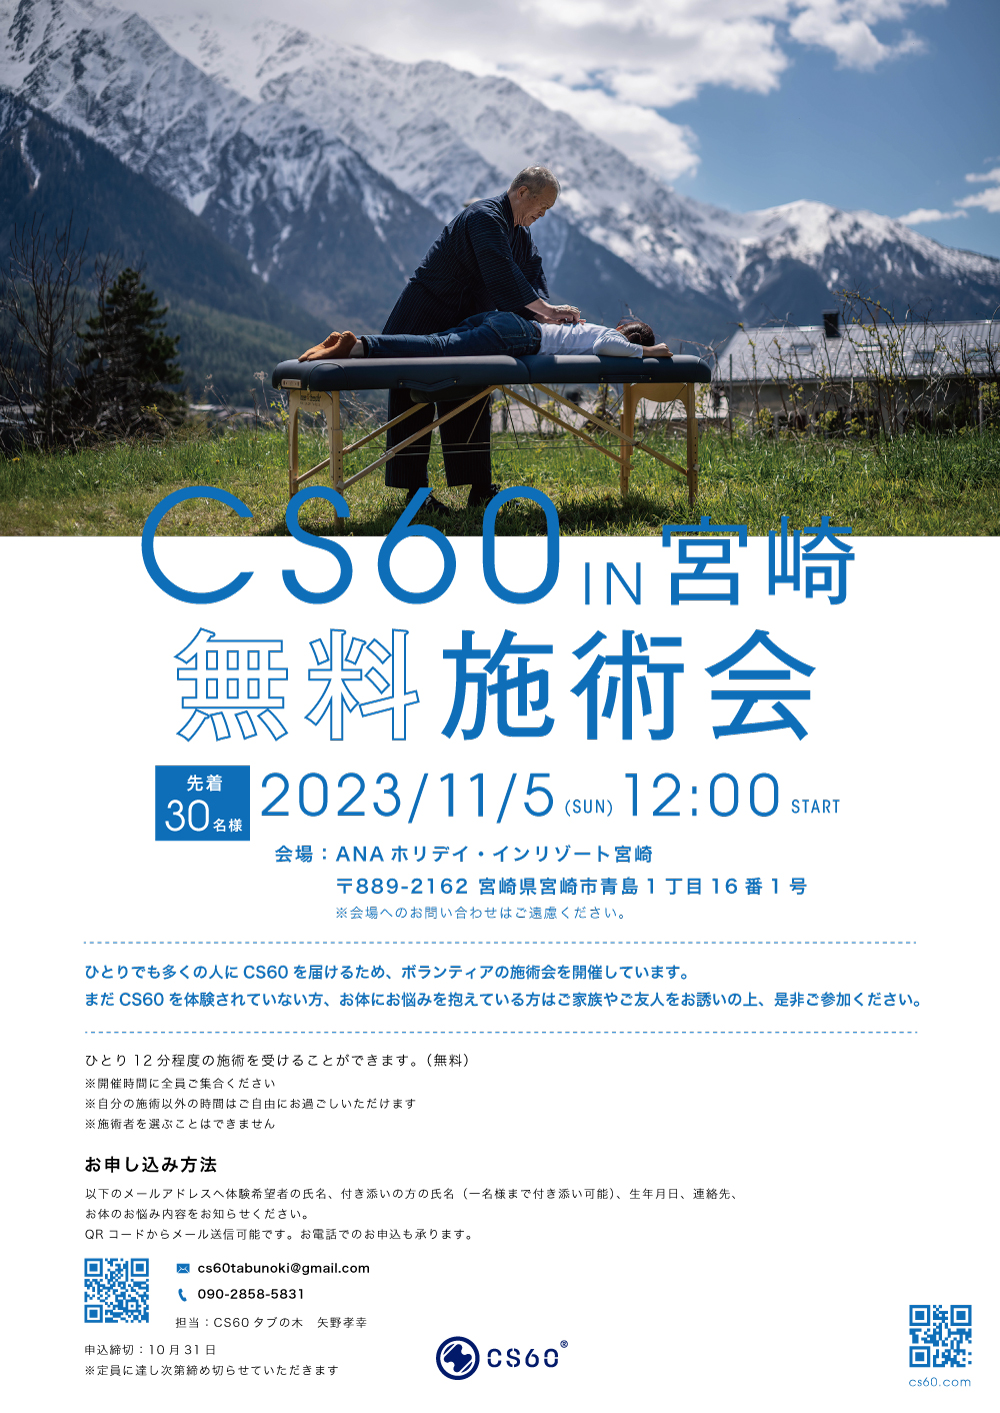 CS60 無料施術体験会 in 宮崎 【2023/11/5】満席のため受付終了となりました。